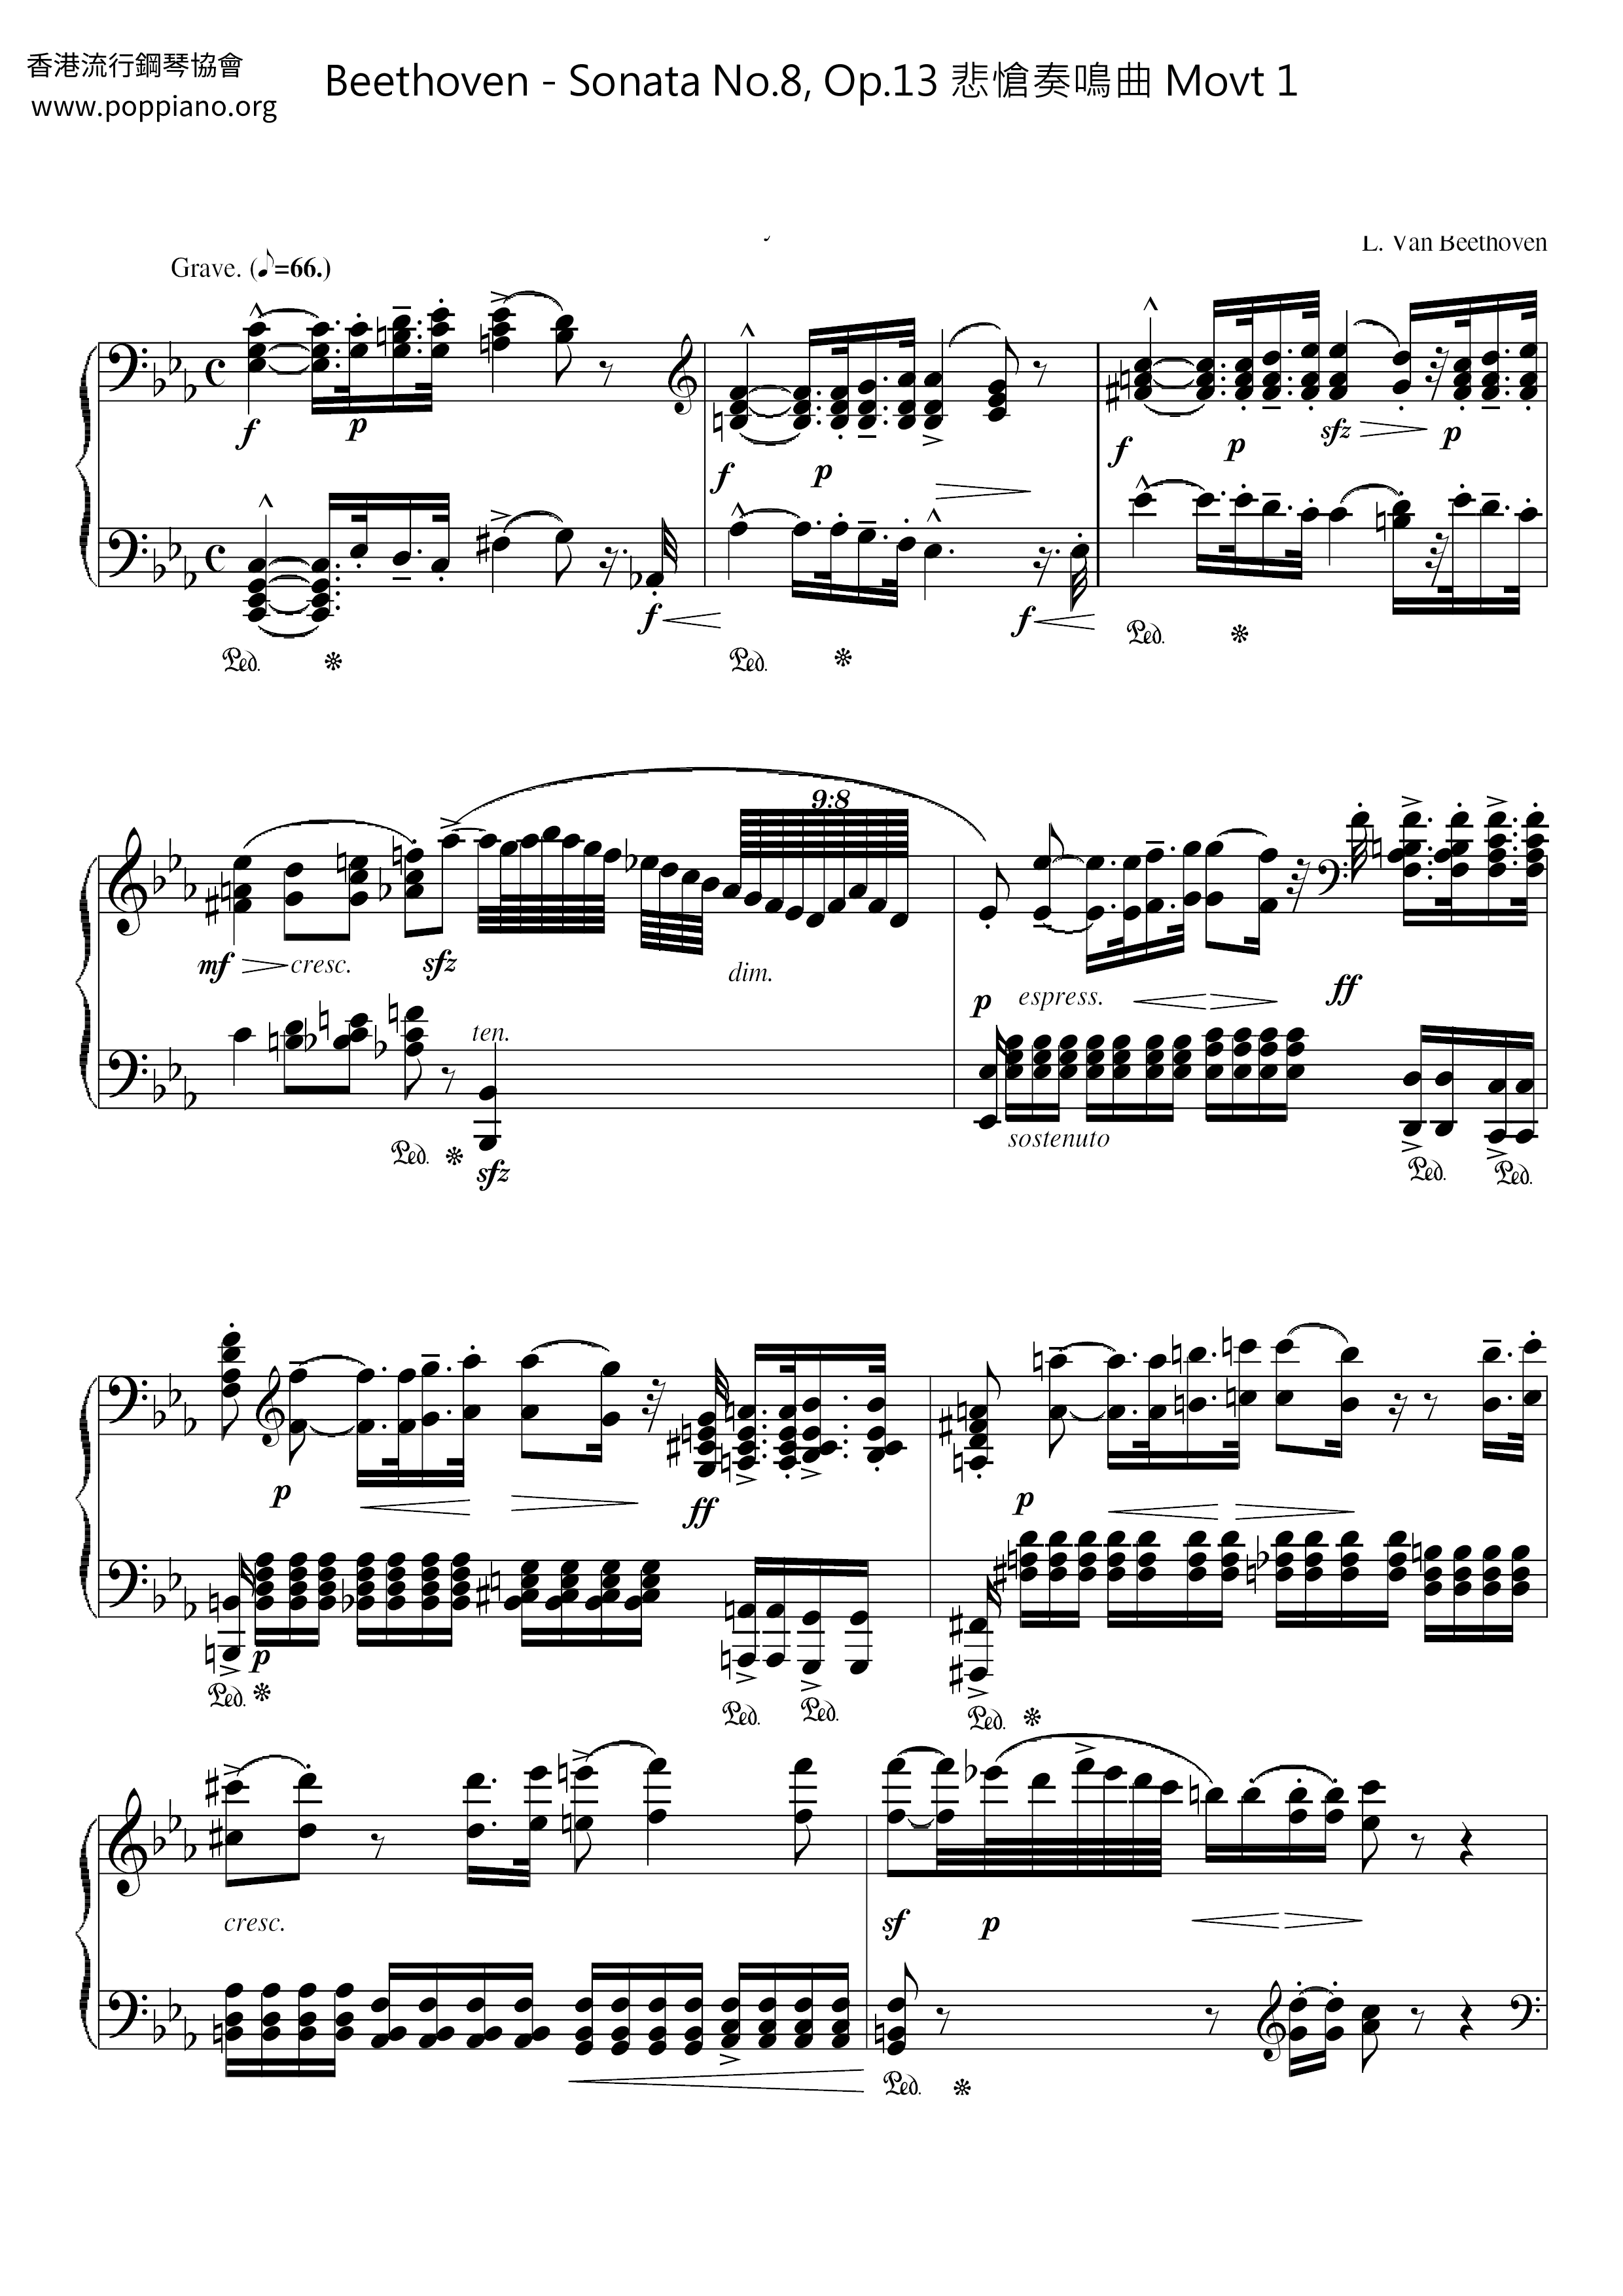 Sonata No. 8, Op. 13 悲愴奏鳴曲 Movt 1琴譜